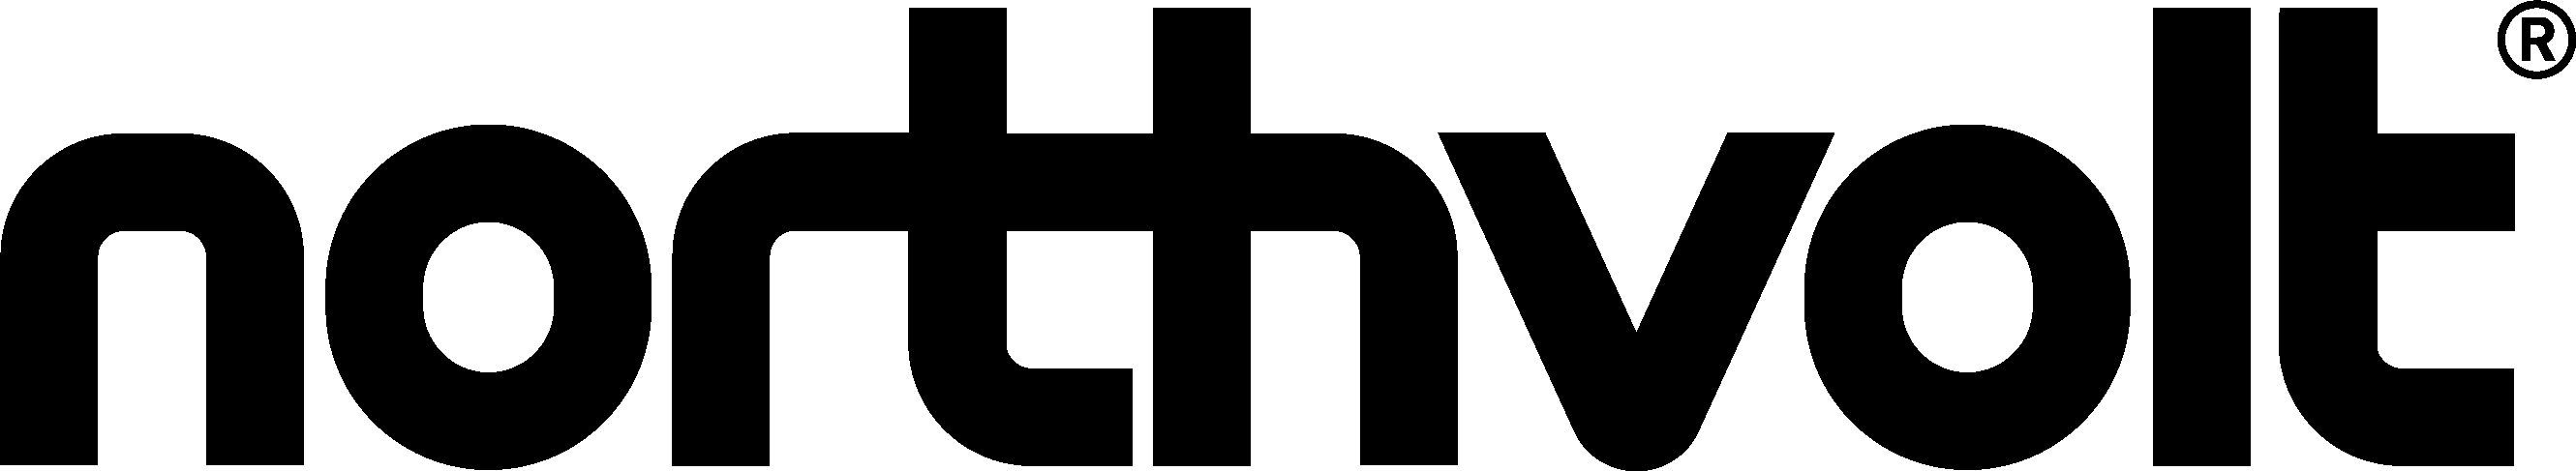 ABB logotype, link to ABB